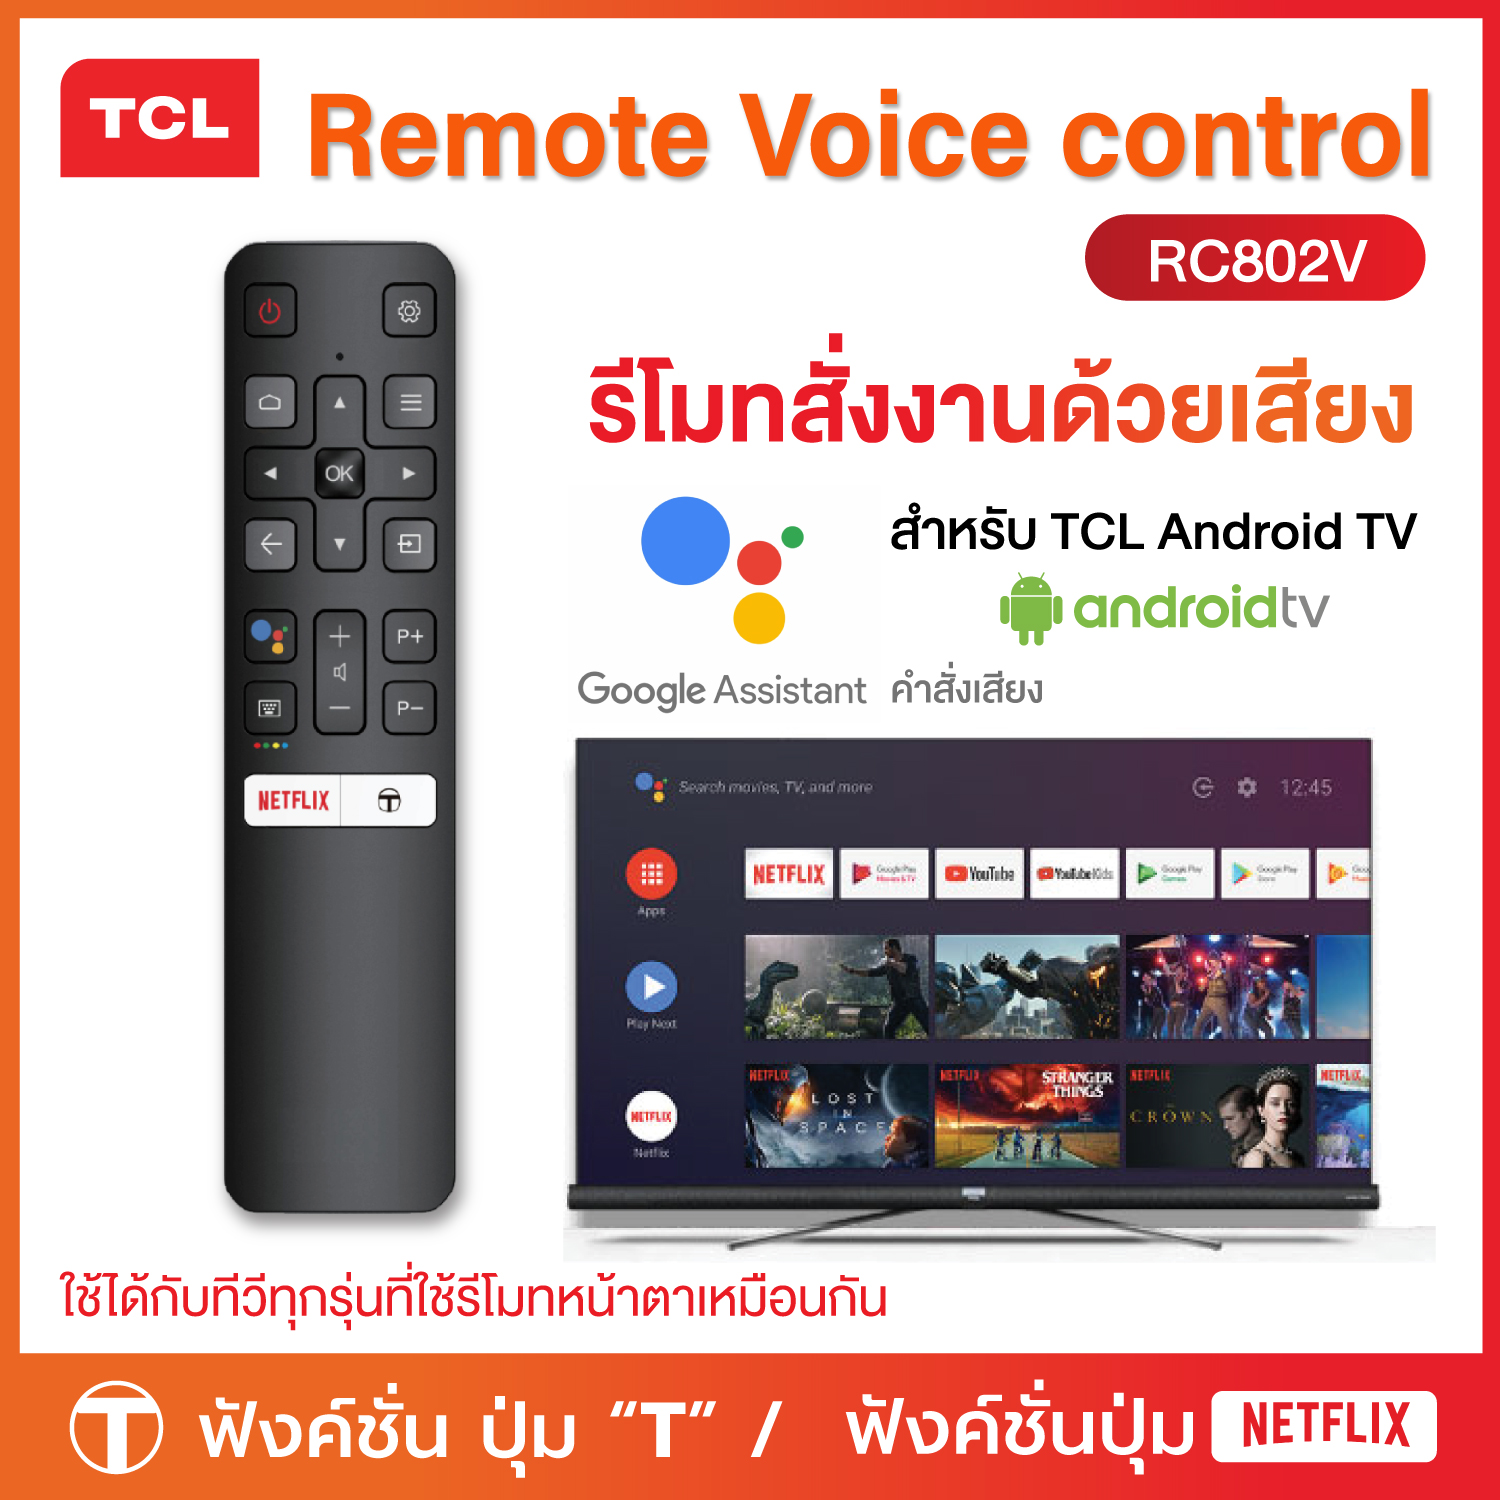 Voice Remote Control RC802V รีโมททีวี TCL สำหรับ Android Ai TV สั่งงานด้วยเสียง ใช้แทนรุ่นที่หน้าตารีโมทเหมือนกันได้ทุกรหัส ประกัน 1 ปี